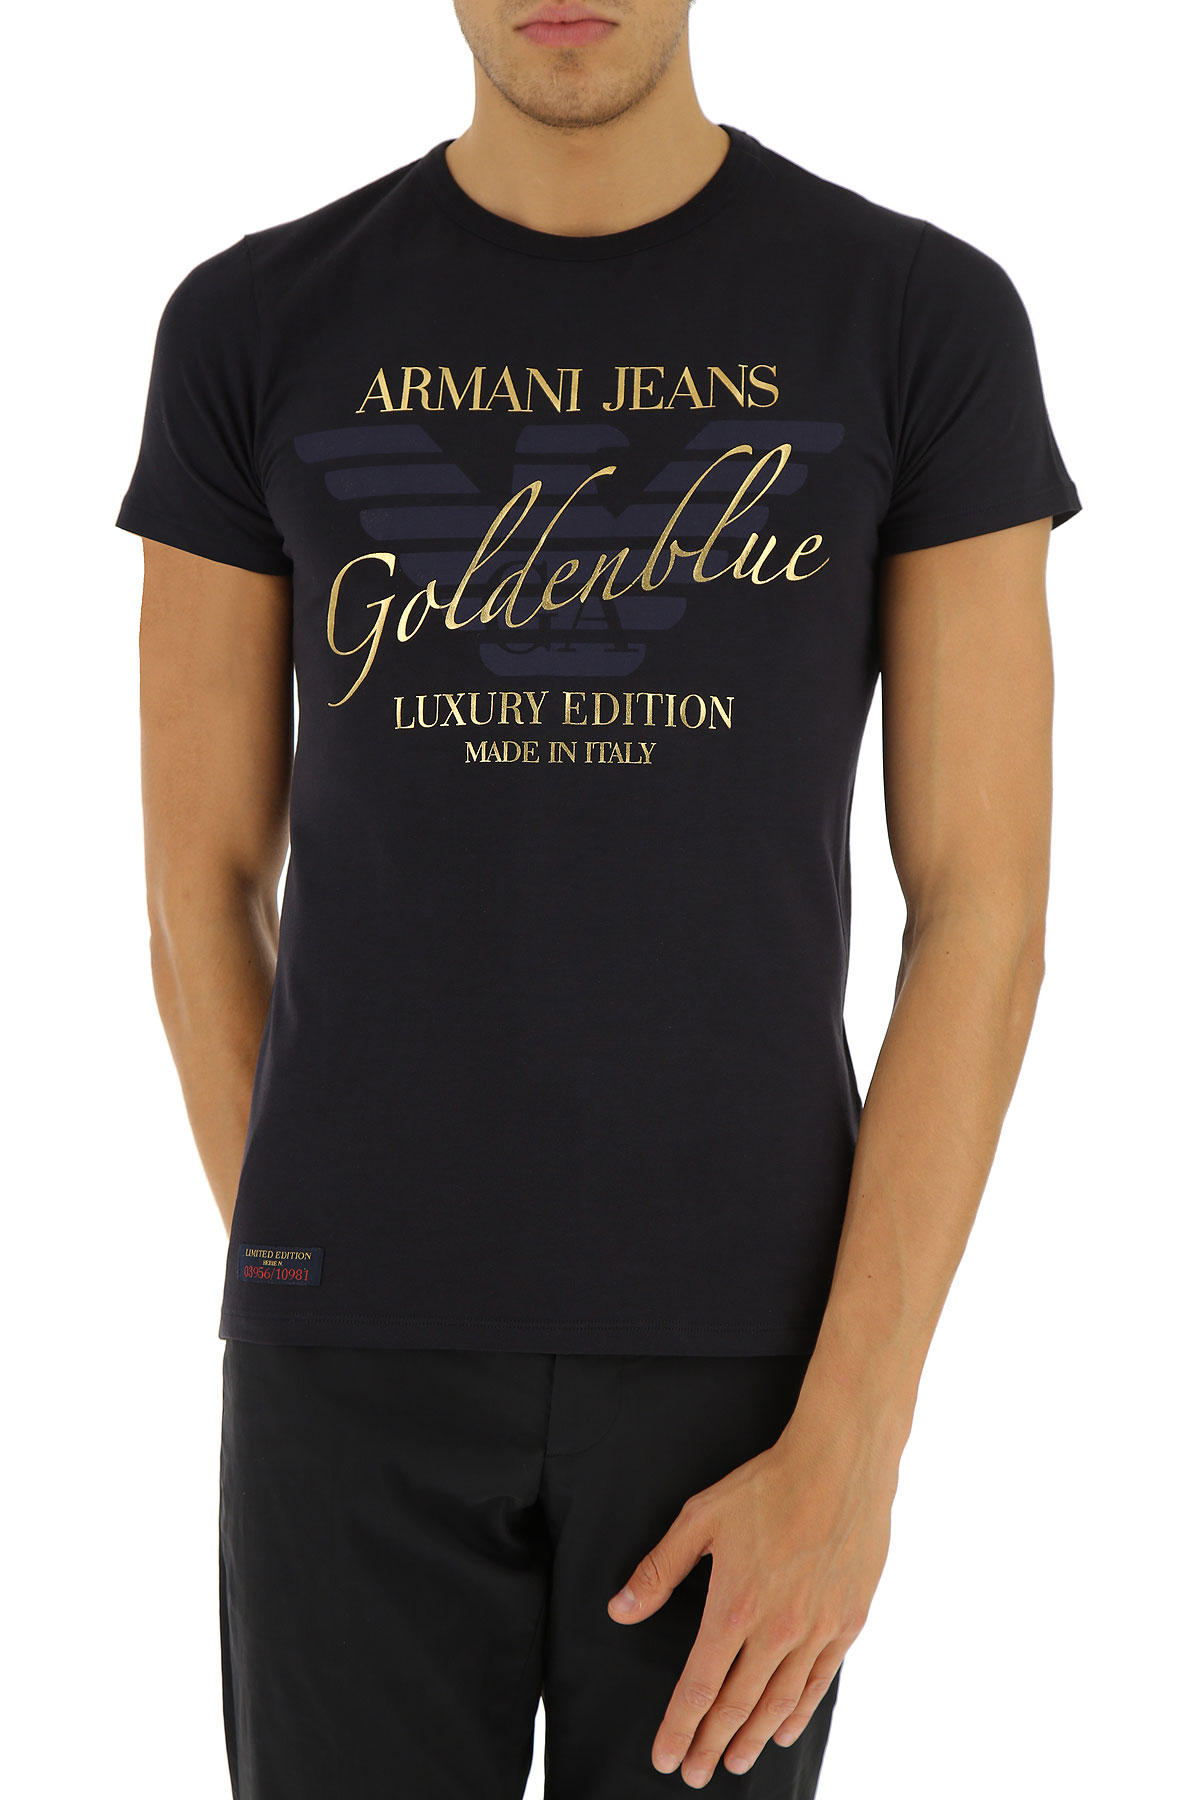 armani jeans golden blue luxury edition